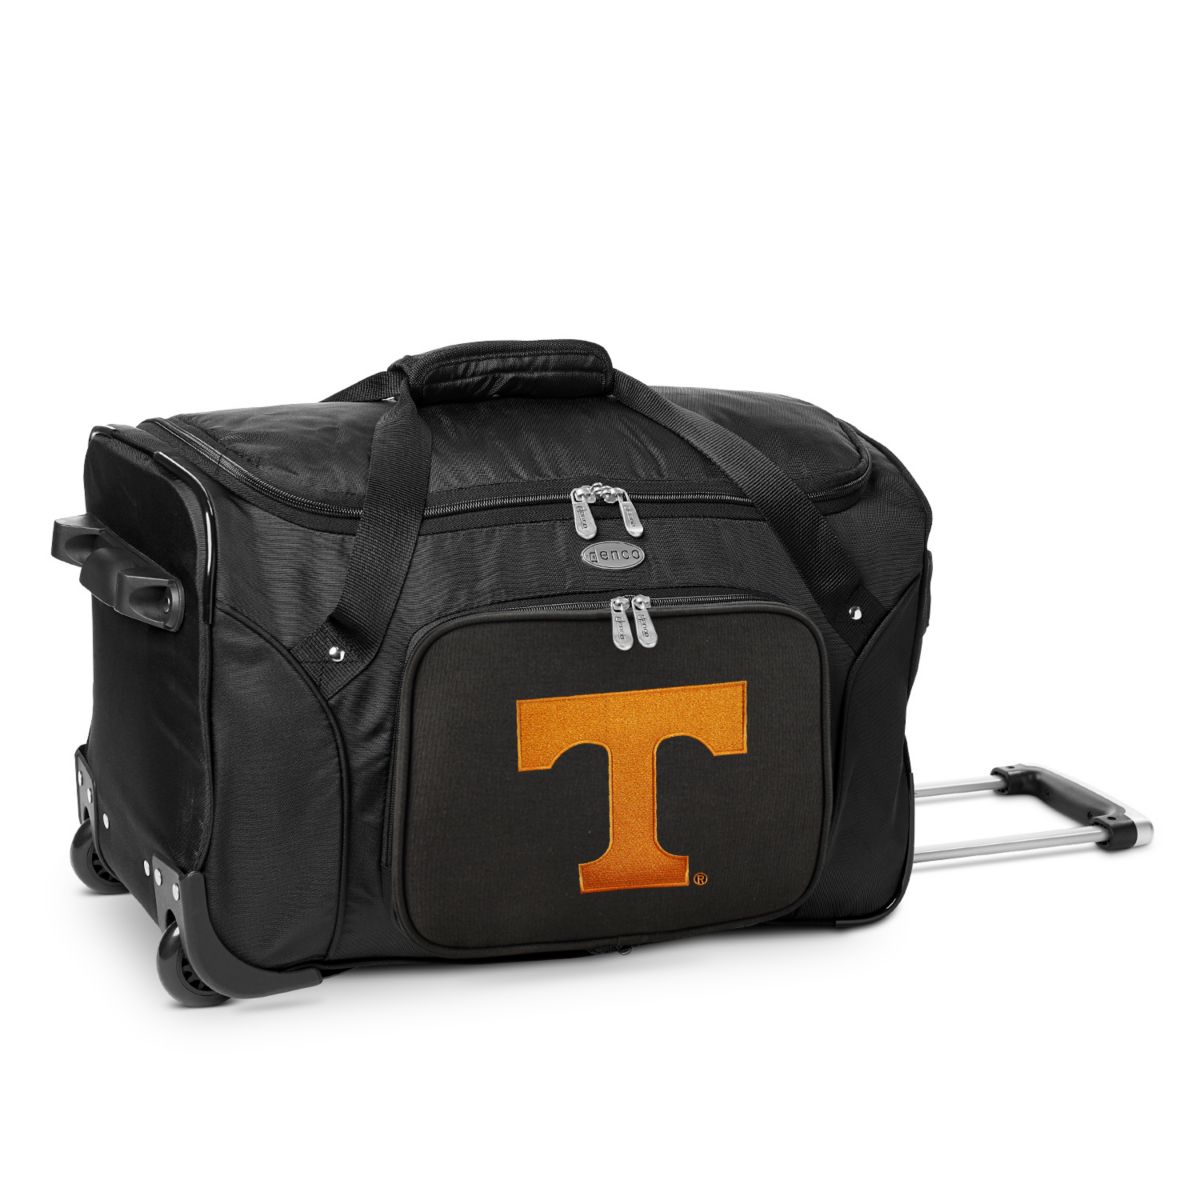 22-дюймовая спортивная сумка Denco Tennessee Volunteers на колесиках Denco